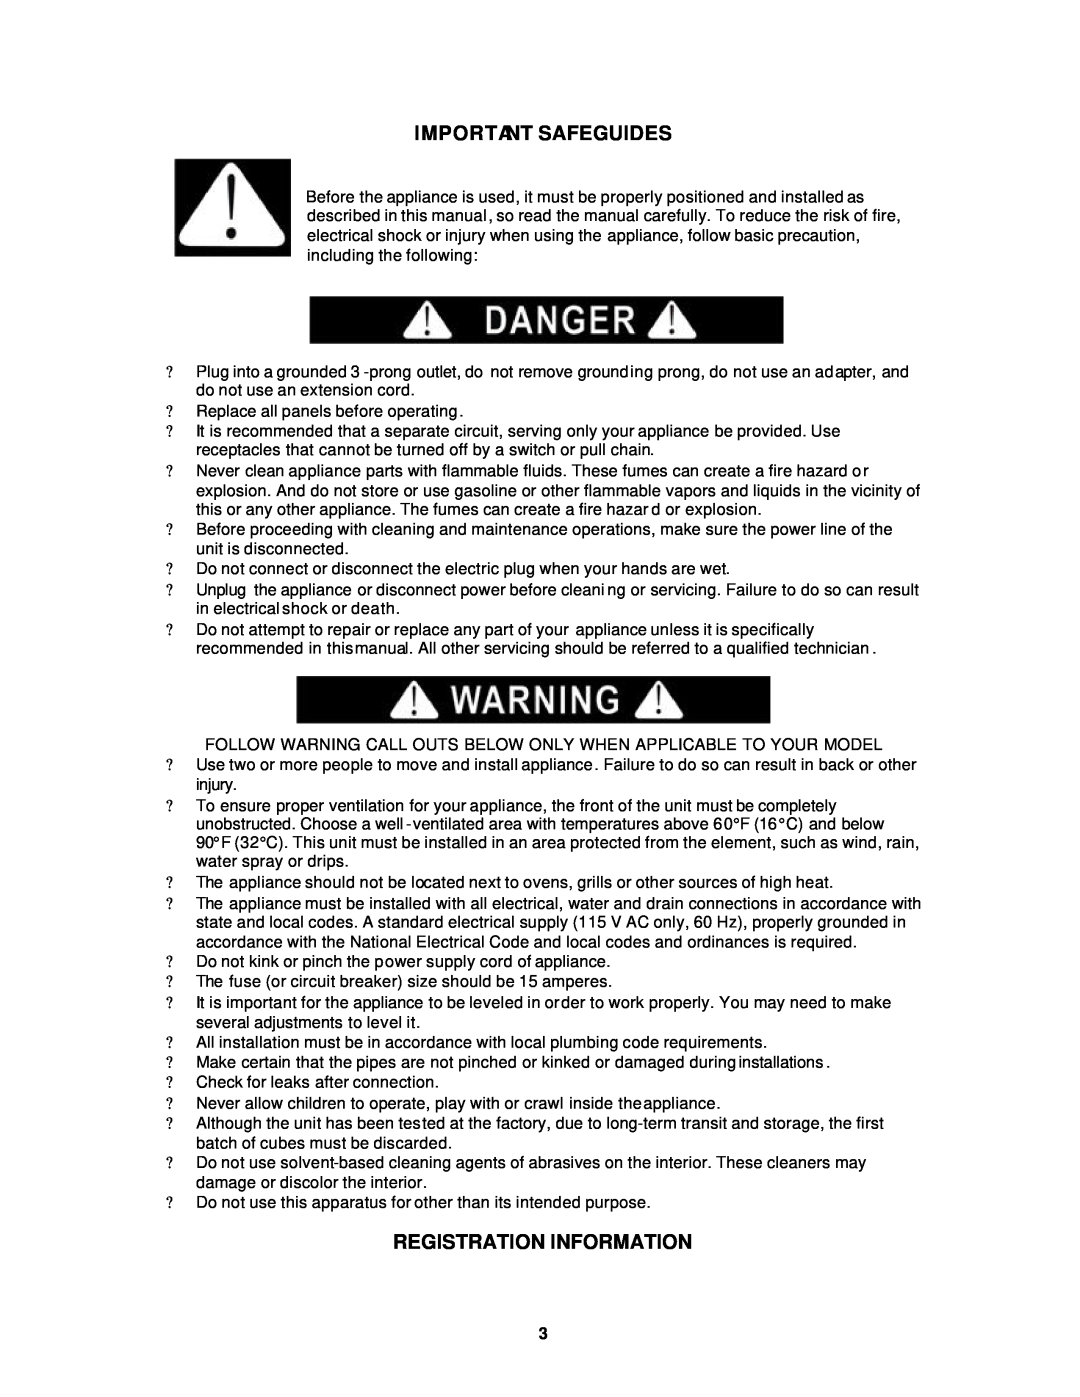 Avanti BCAD680 instruction manual Important Safeguides, Registration Information 